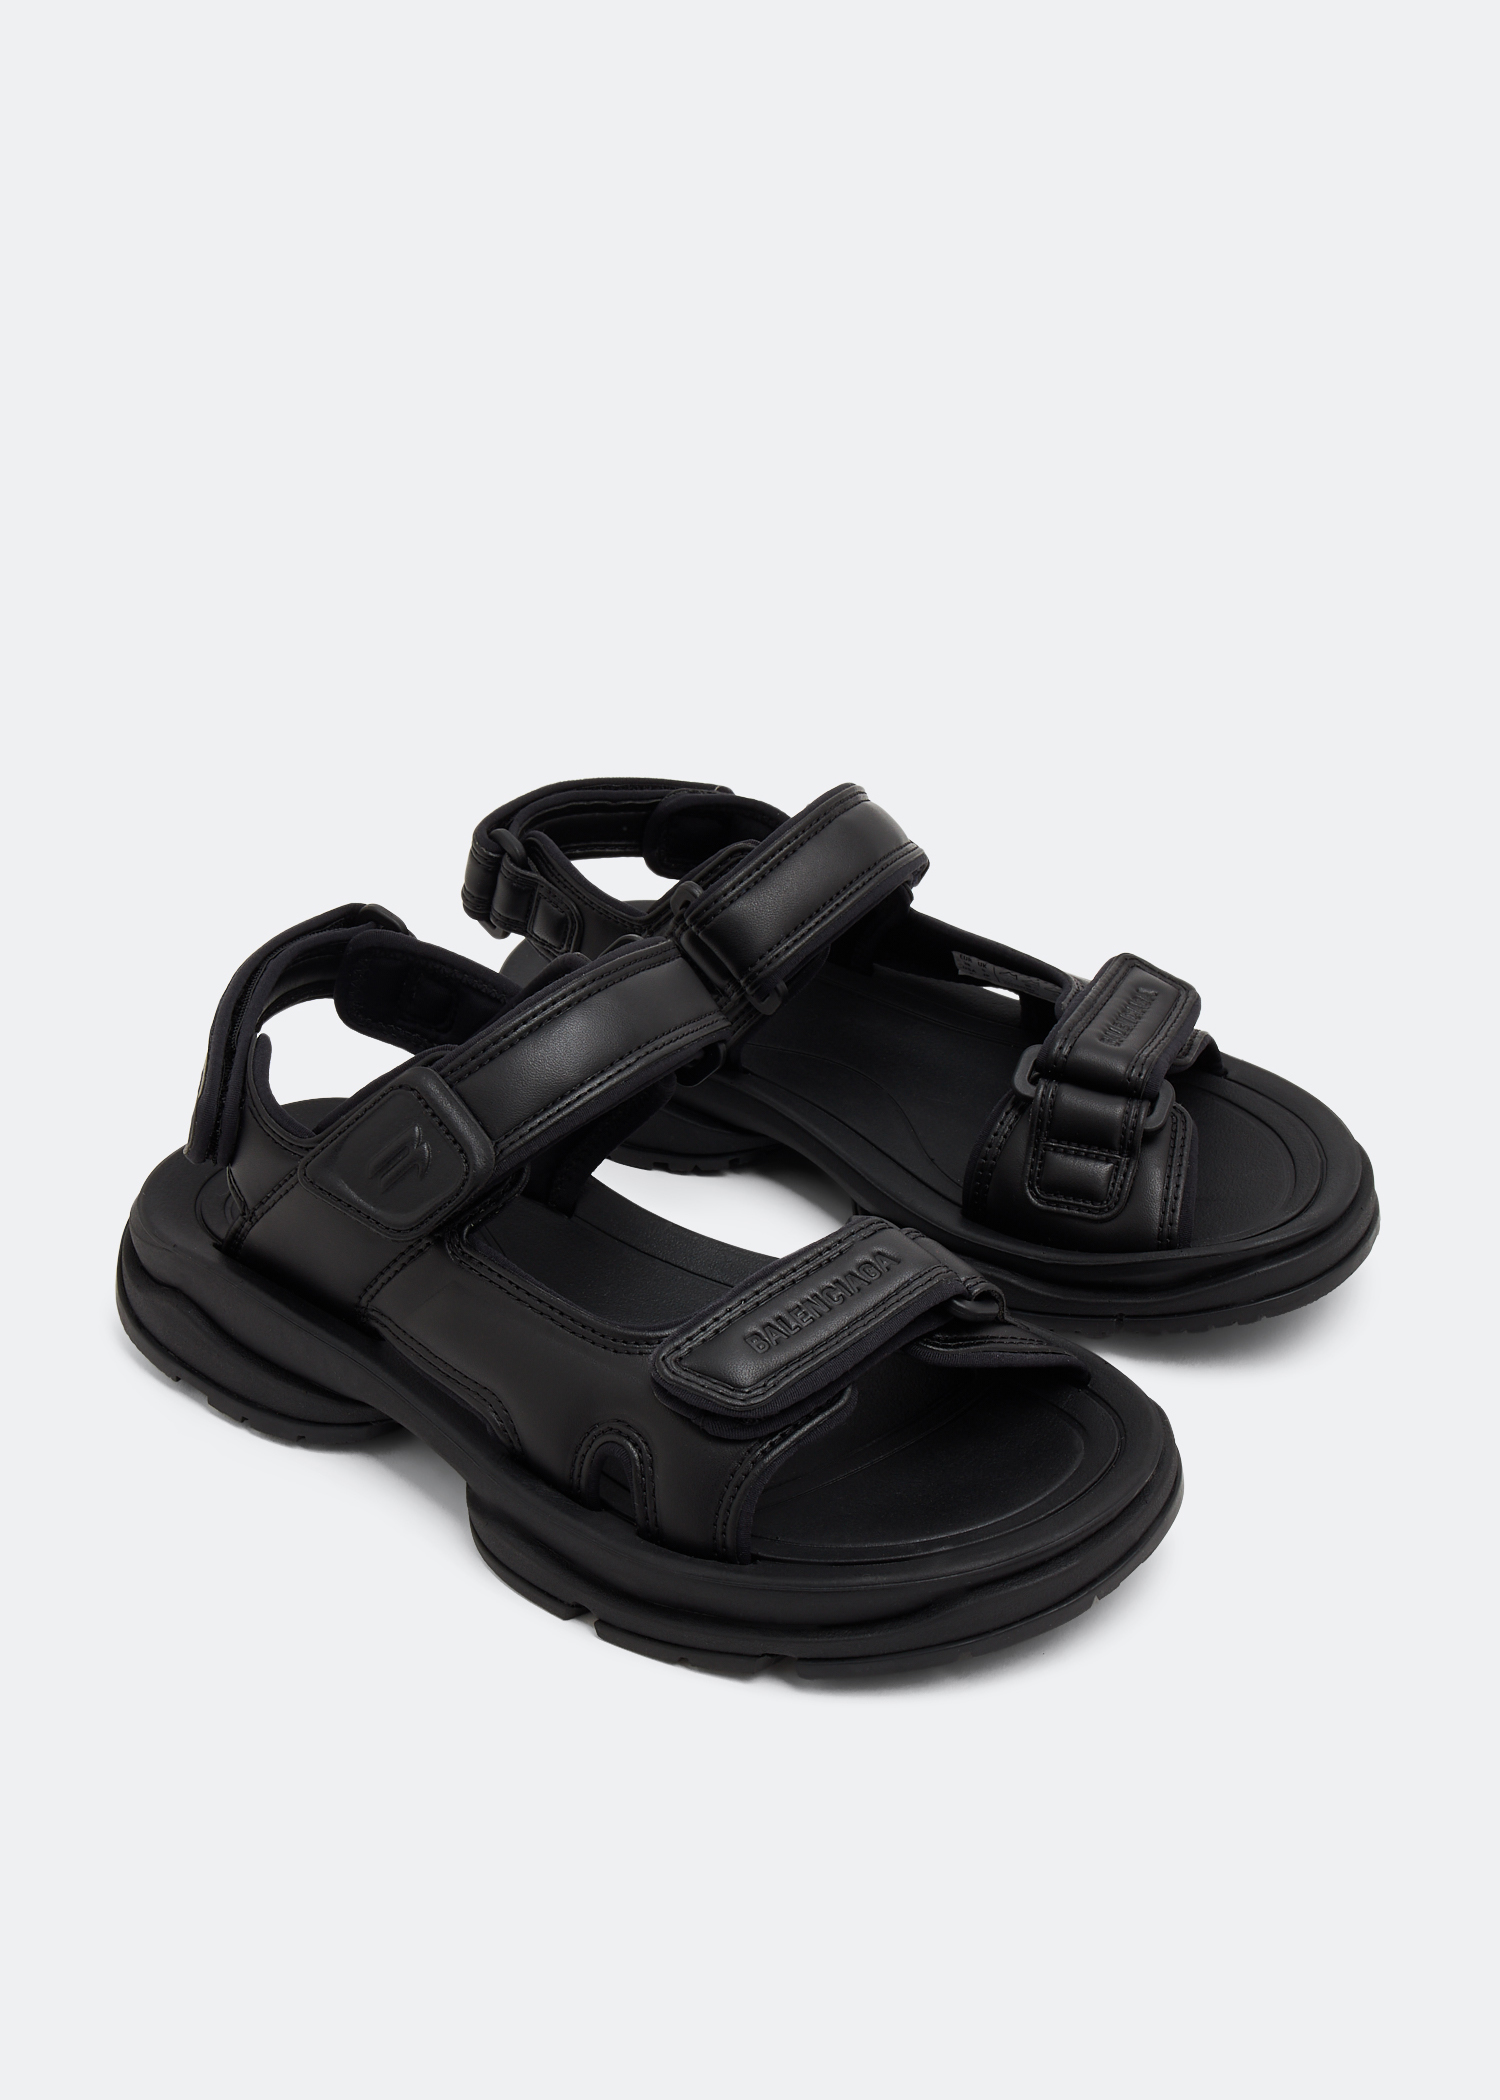 Balenciaga Black Leather Track Sandals Size 41 Balenciaga  TLC